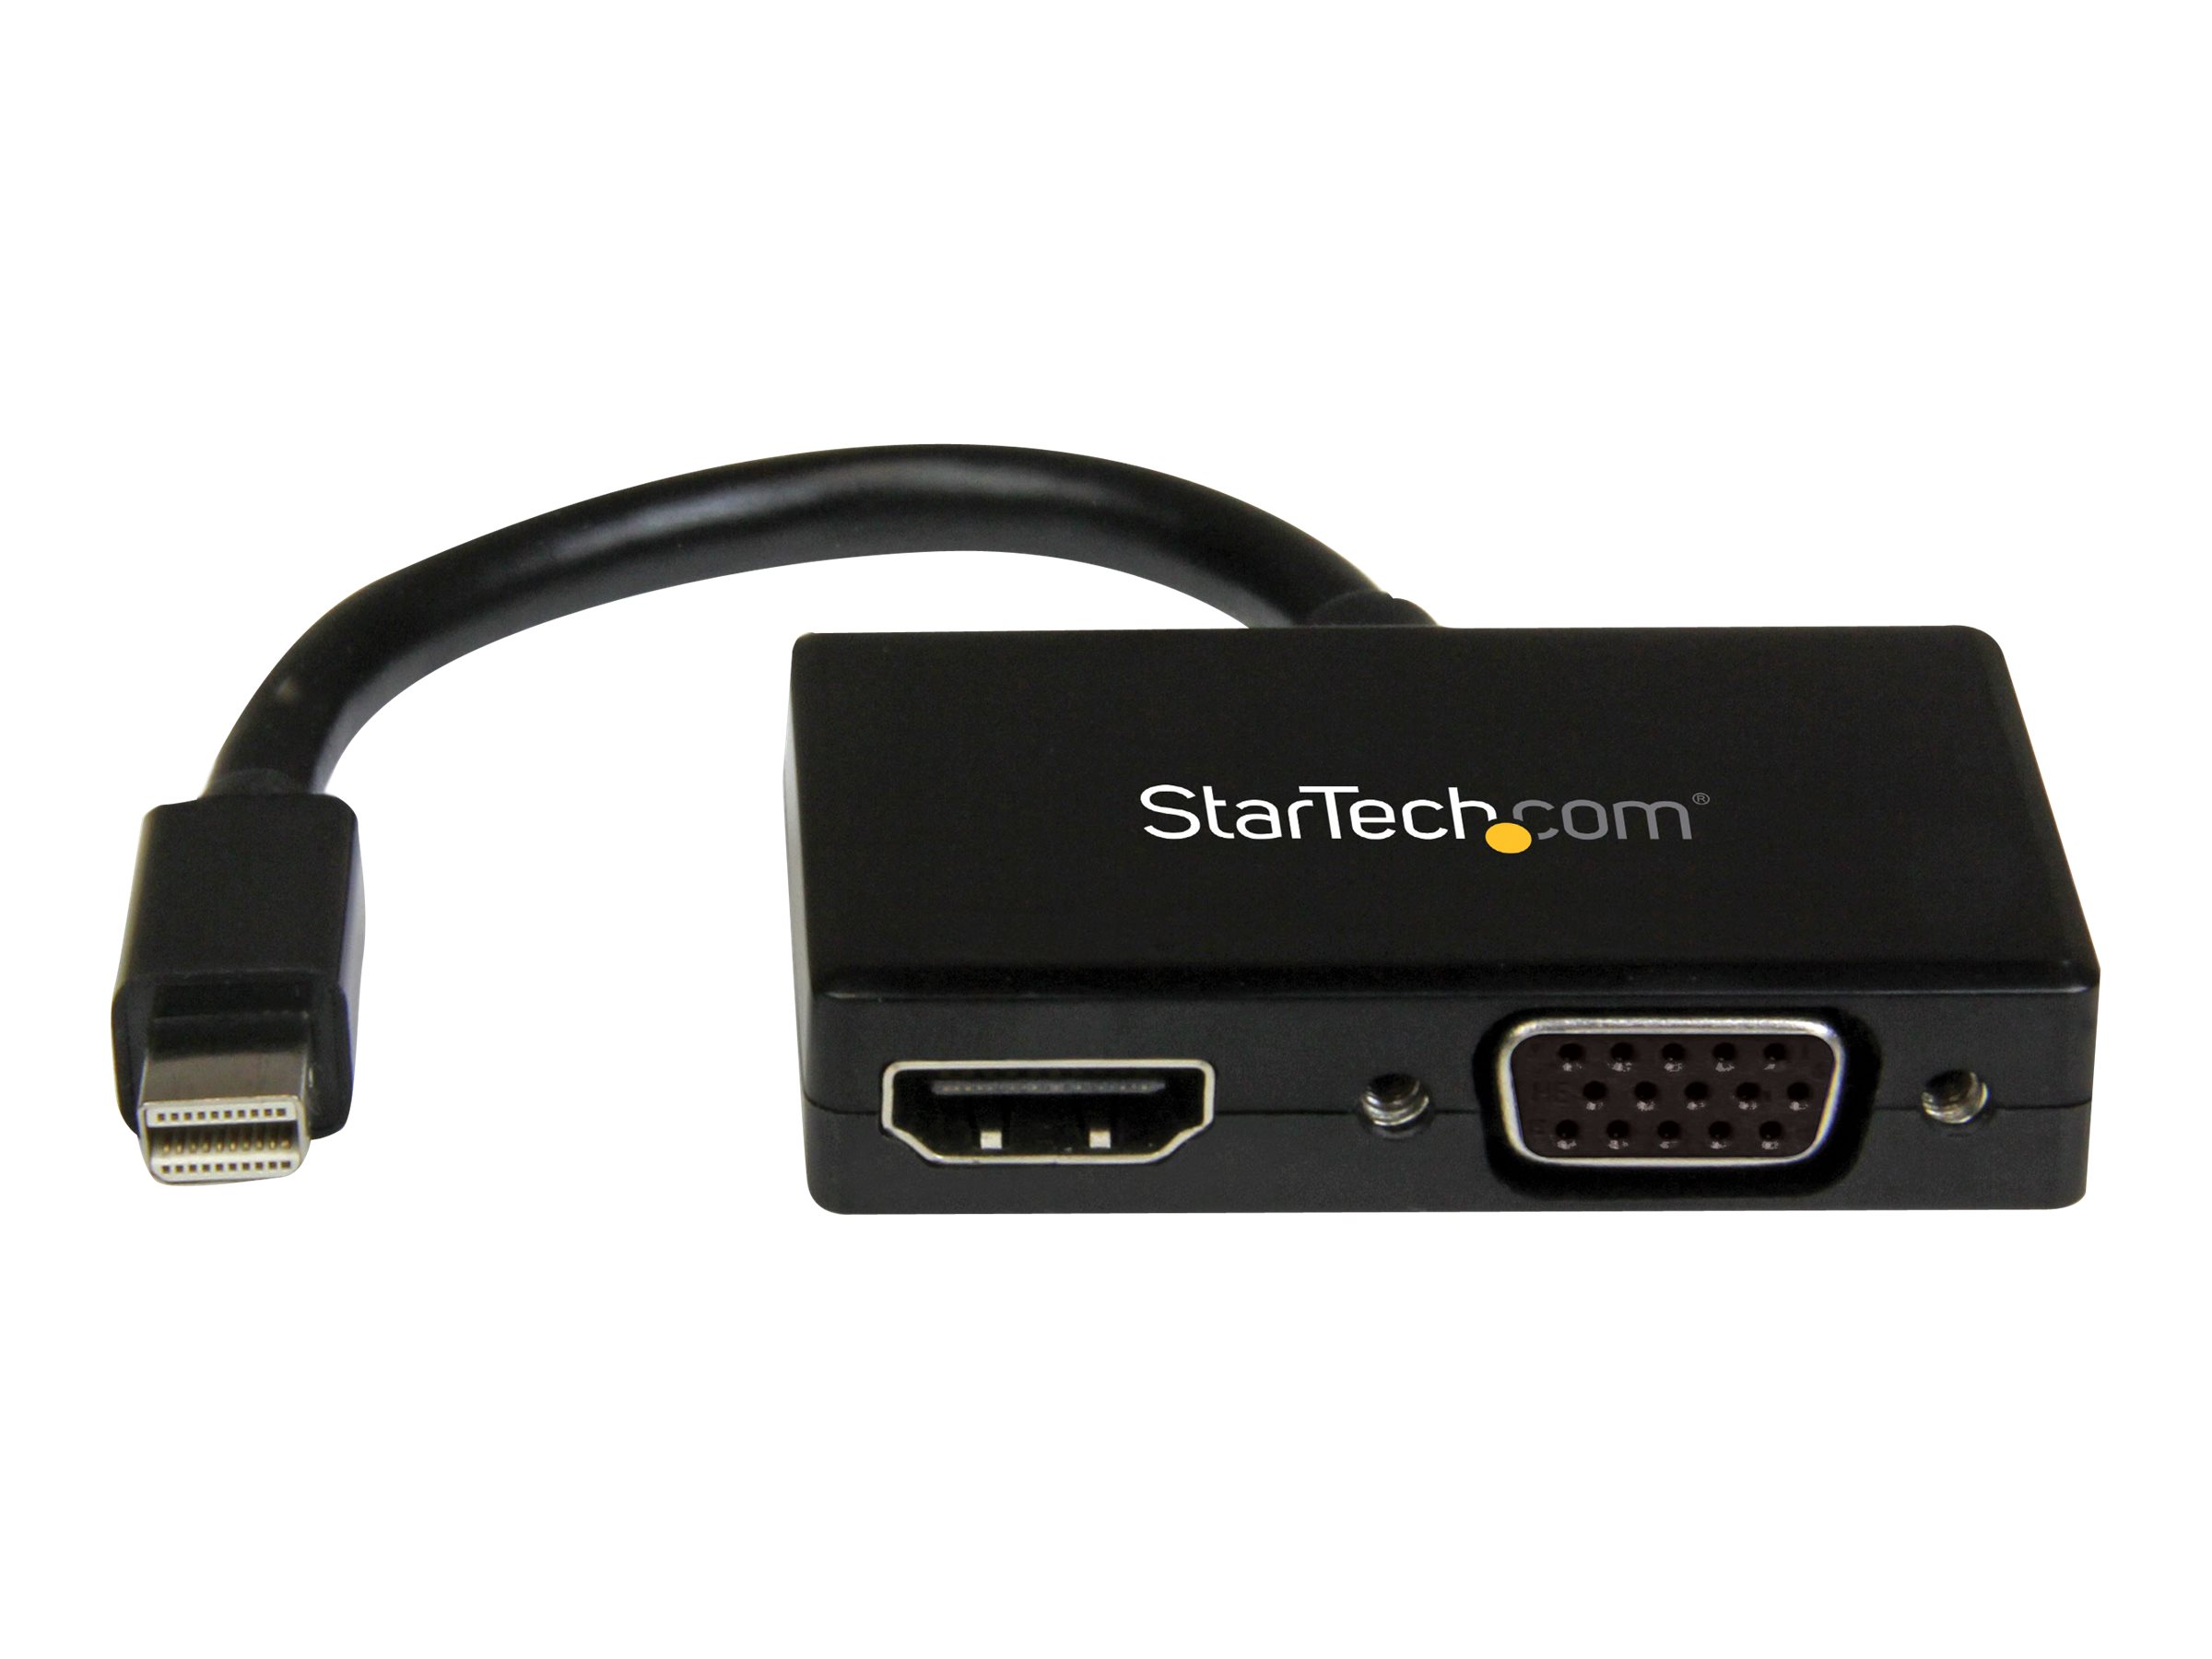 StarTech.com Reise A/V Adapter: 2-in-1 Mini DisplayPort auf HDMI oder VGA Konverter - mDP zu HDMI / VGA Adapter im kompakten Design - Videokonverter - Schwarz